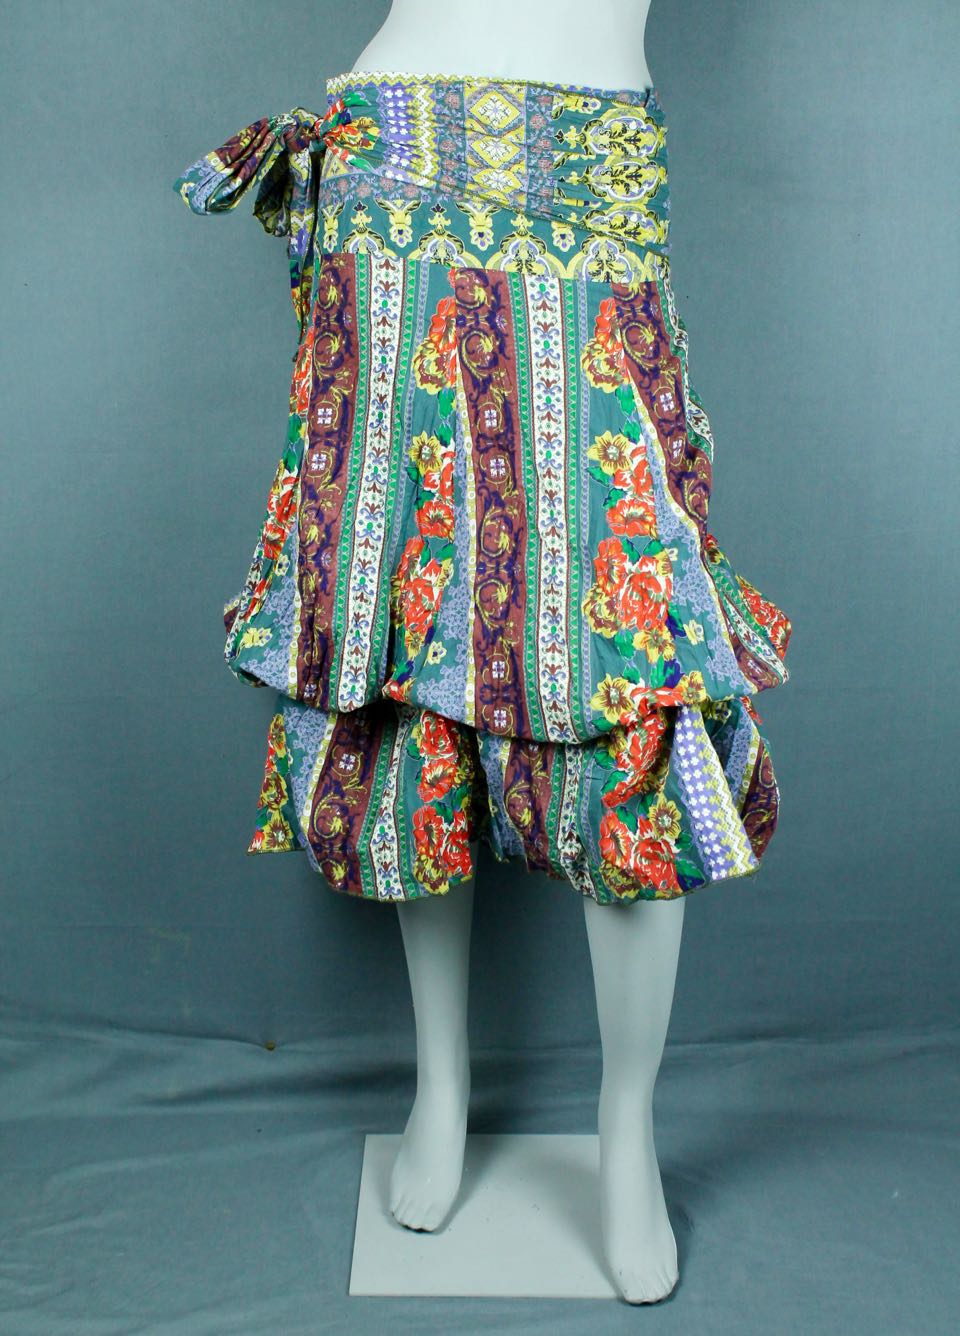 Kiran Fashion Cotton Skirt Maxi Embroidered Lace Gypsy Boho Casual Festival  10 12 14 16 18 20 (Beige) : Amazon.co.uk: Fashion